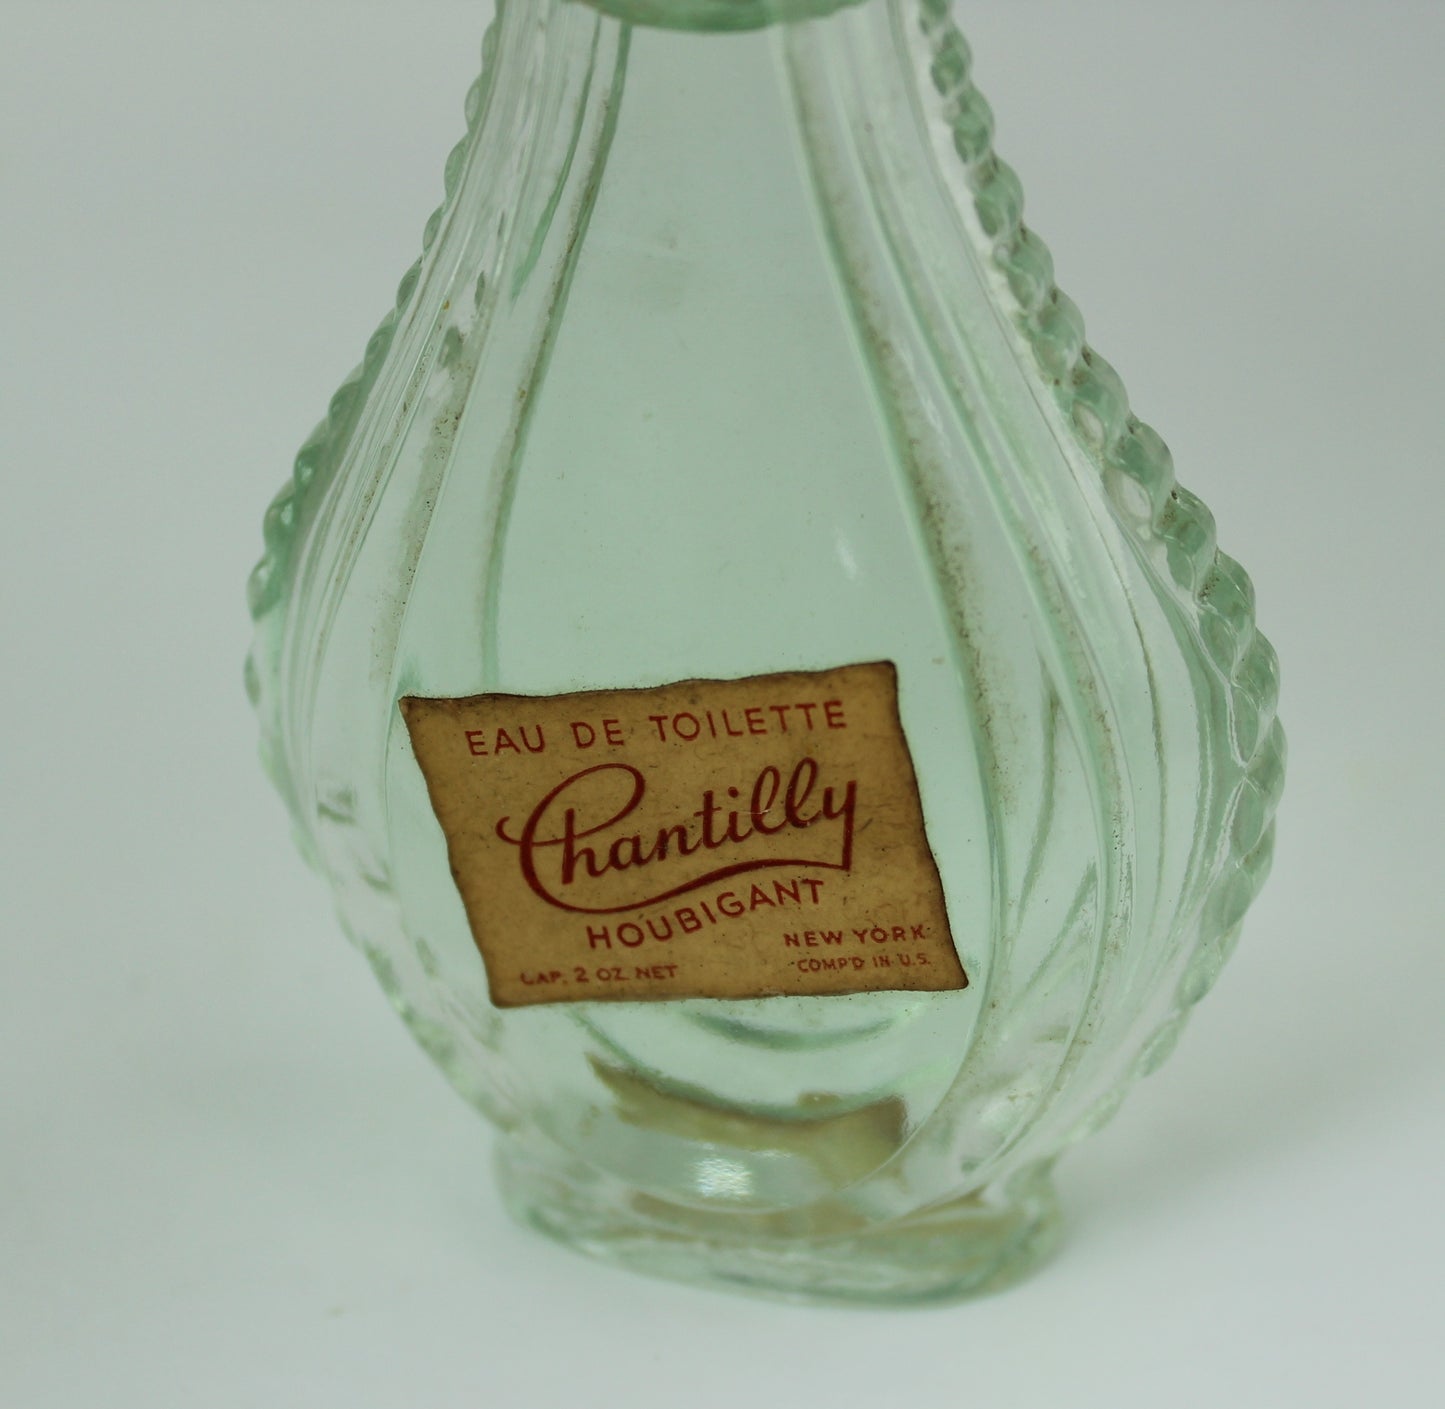 Old Chantilly Houbigant Launched 1941 Dummy Factice Perfume Bottle 2 Oz 4 3/4" original label